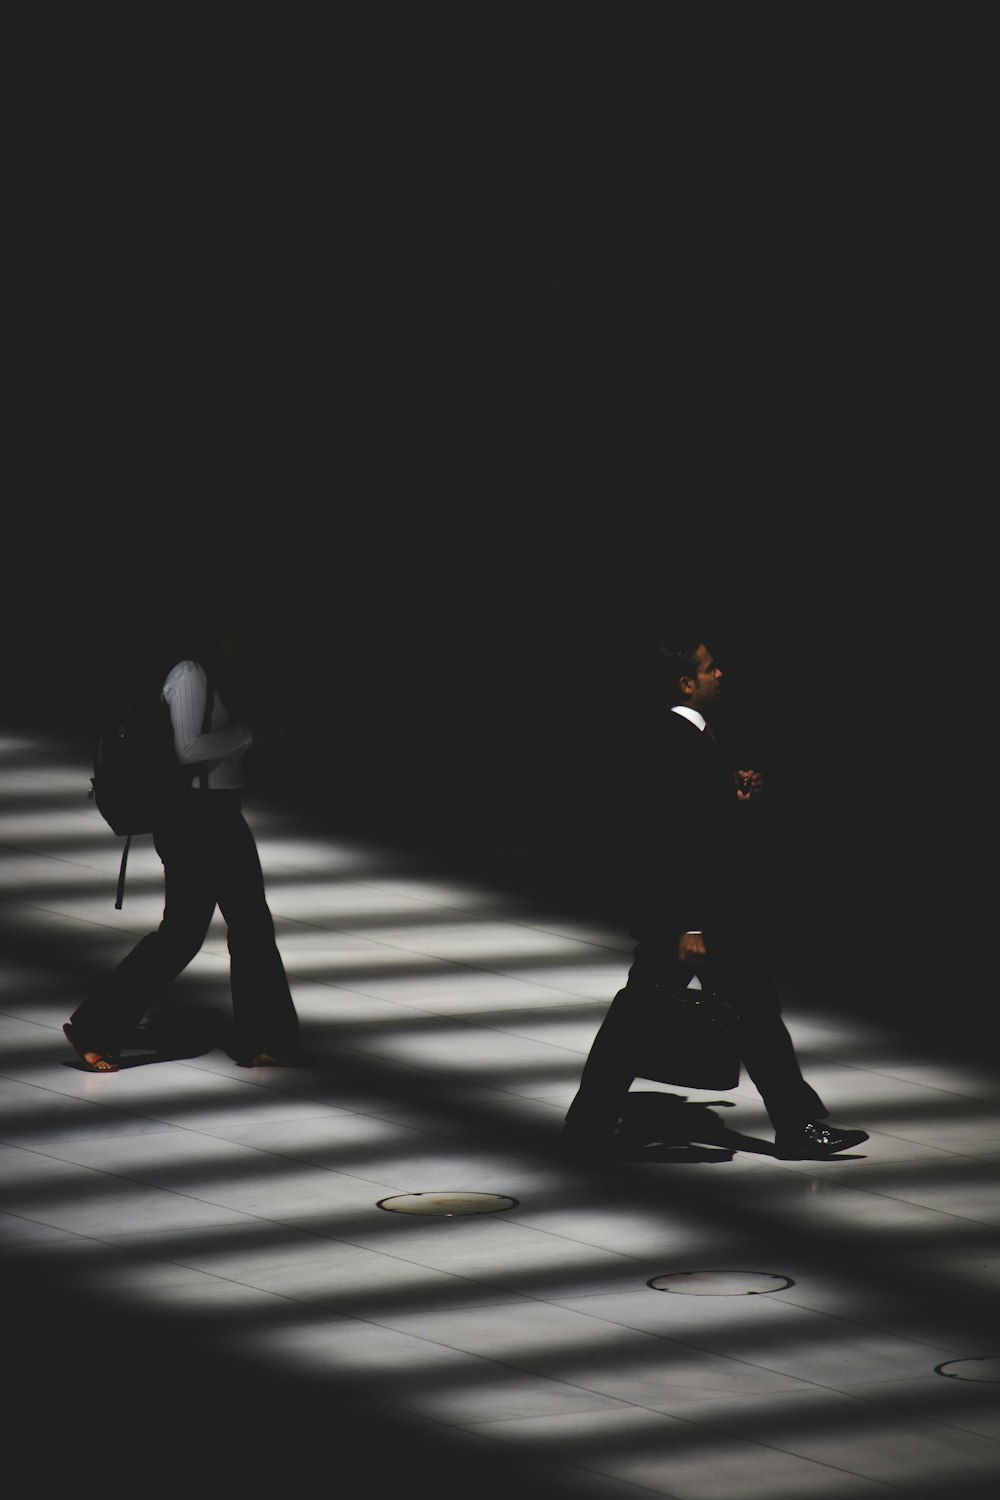 Dos personas caminando dentro del edificio con iluminación negra